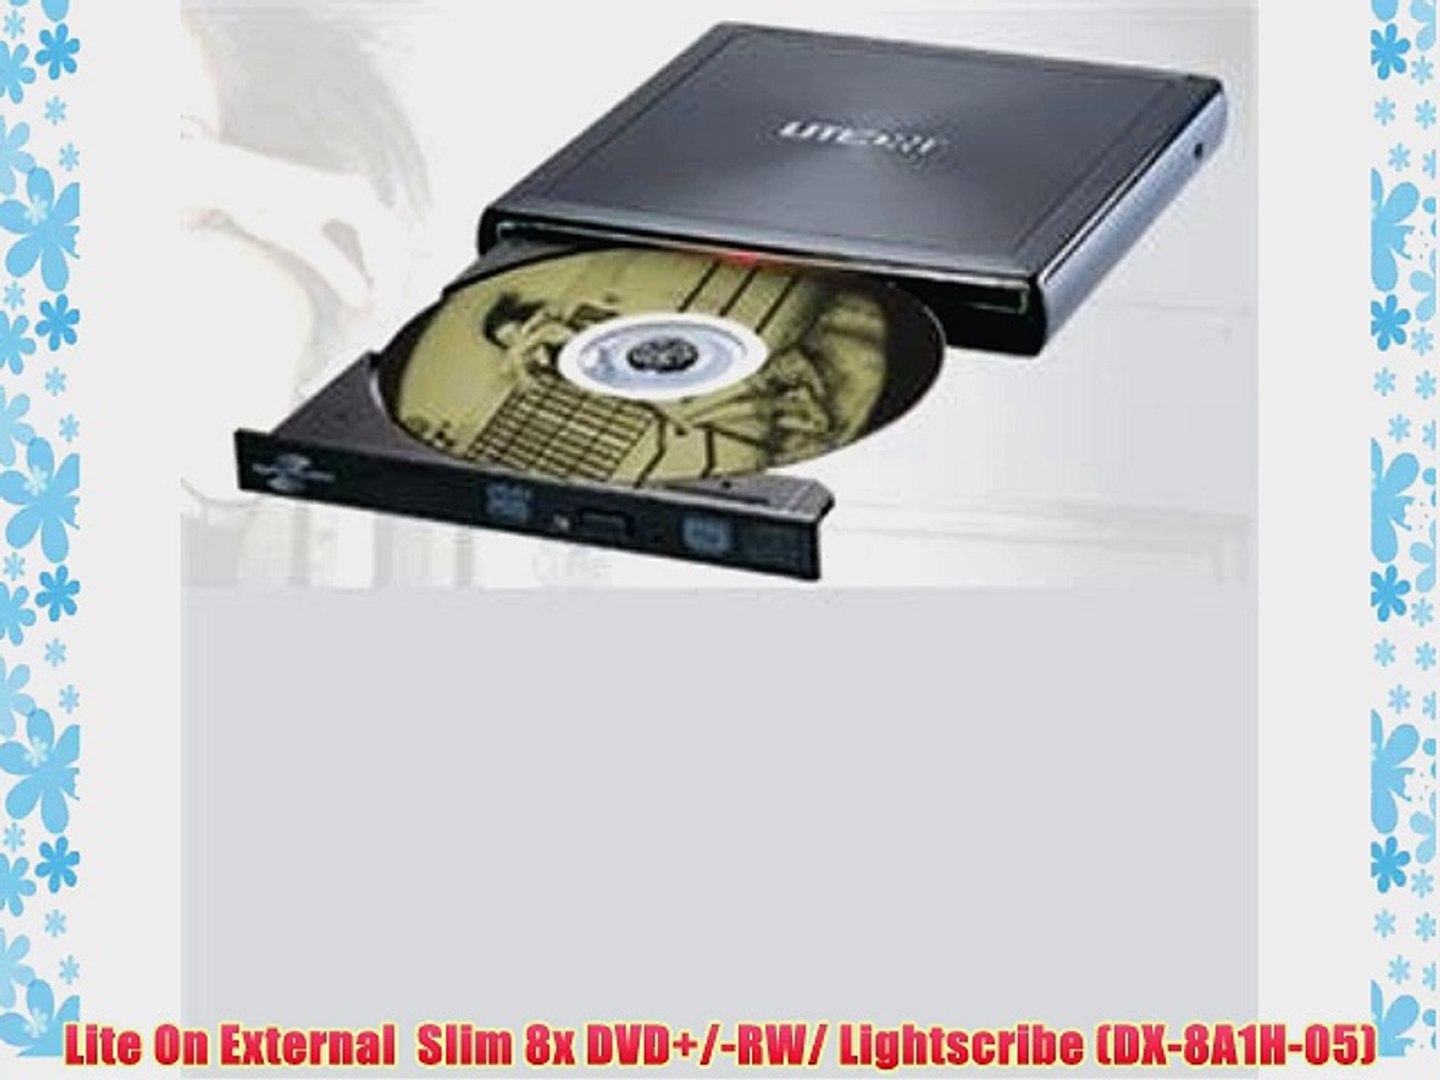 Liteon 8X DVDrw Slim Lightscribe USB Black